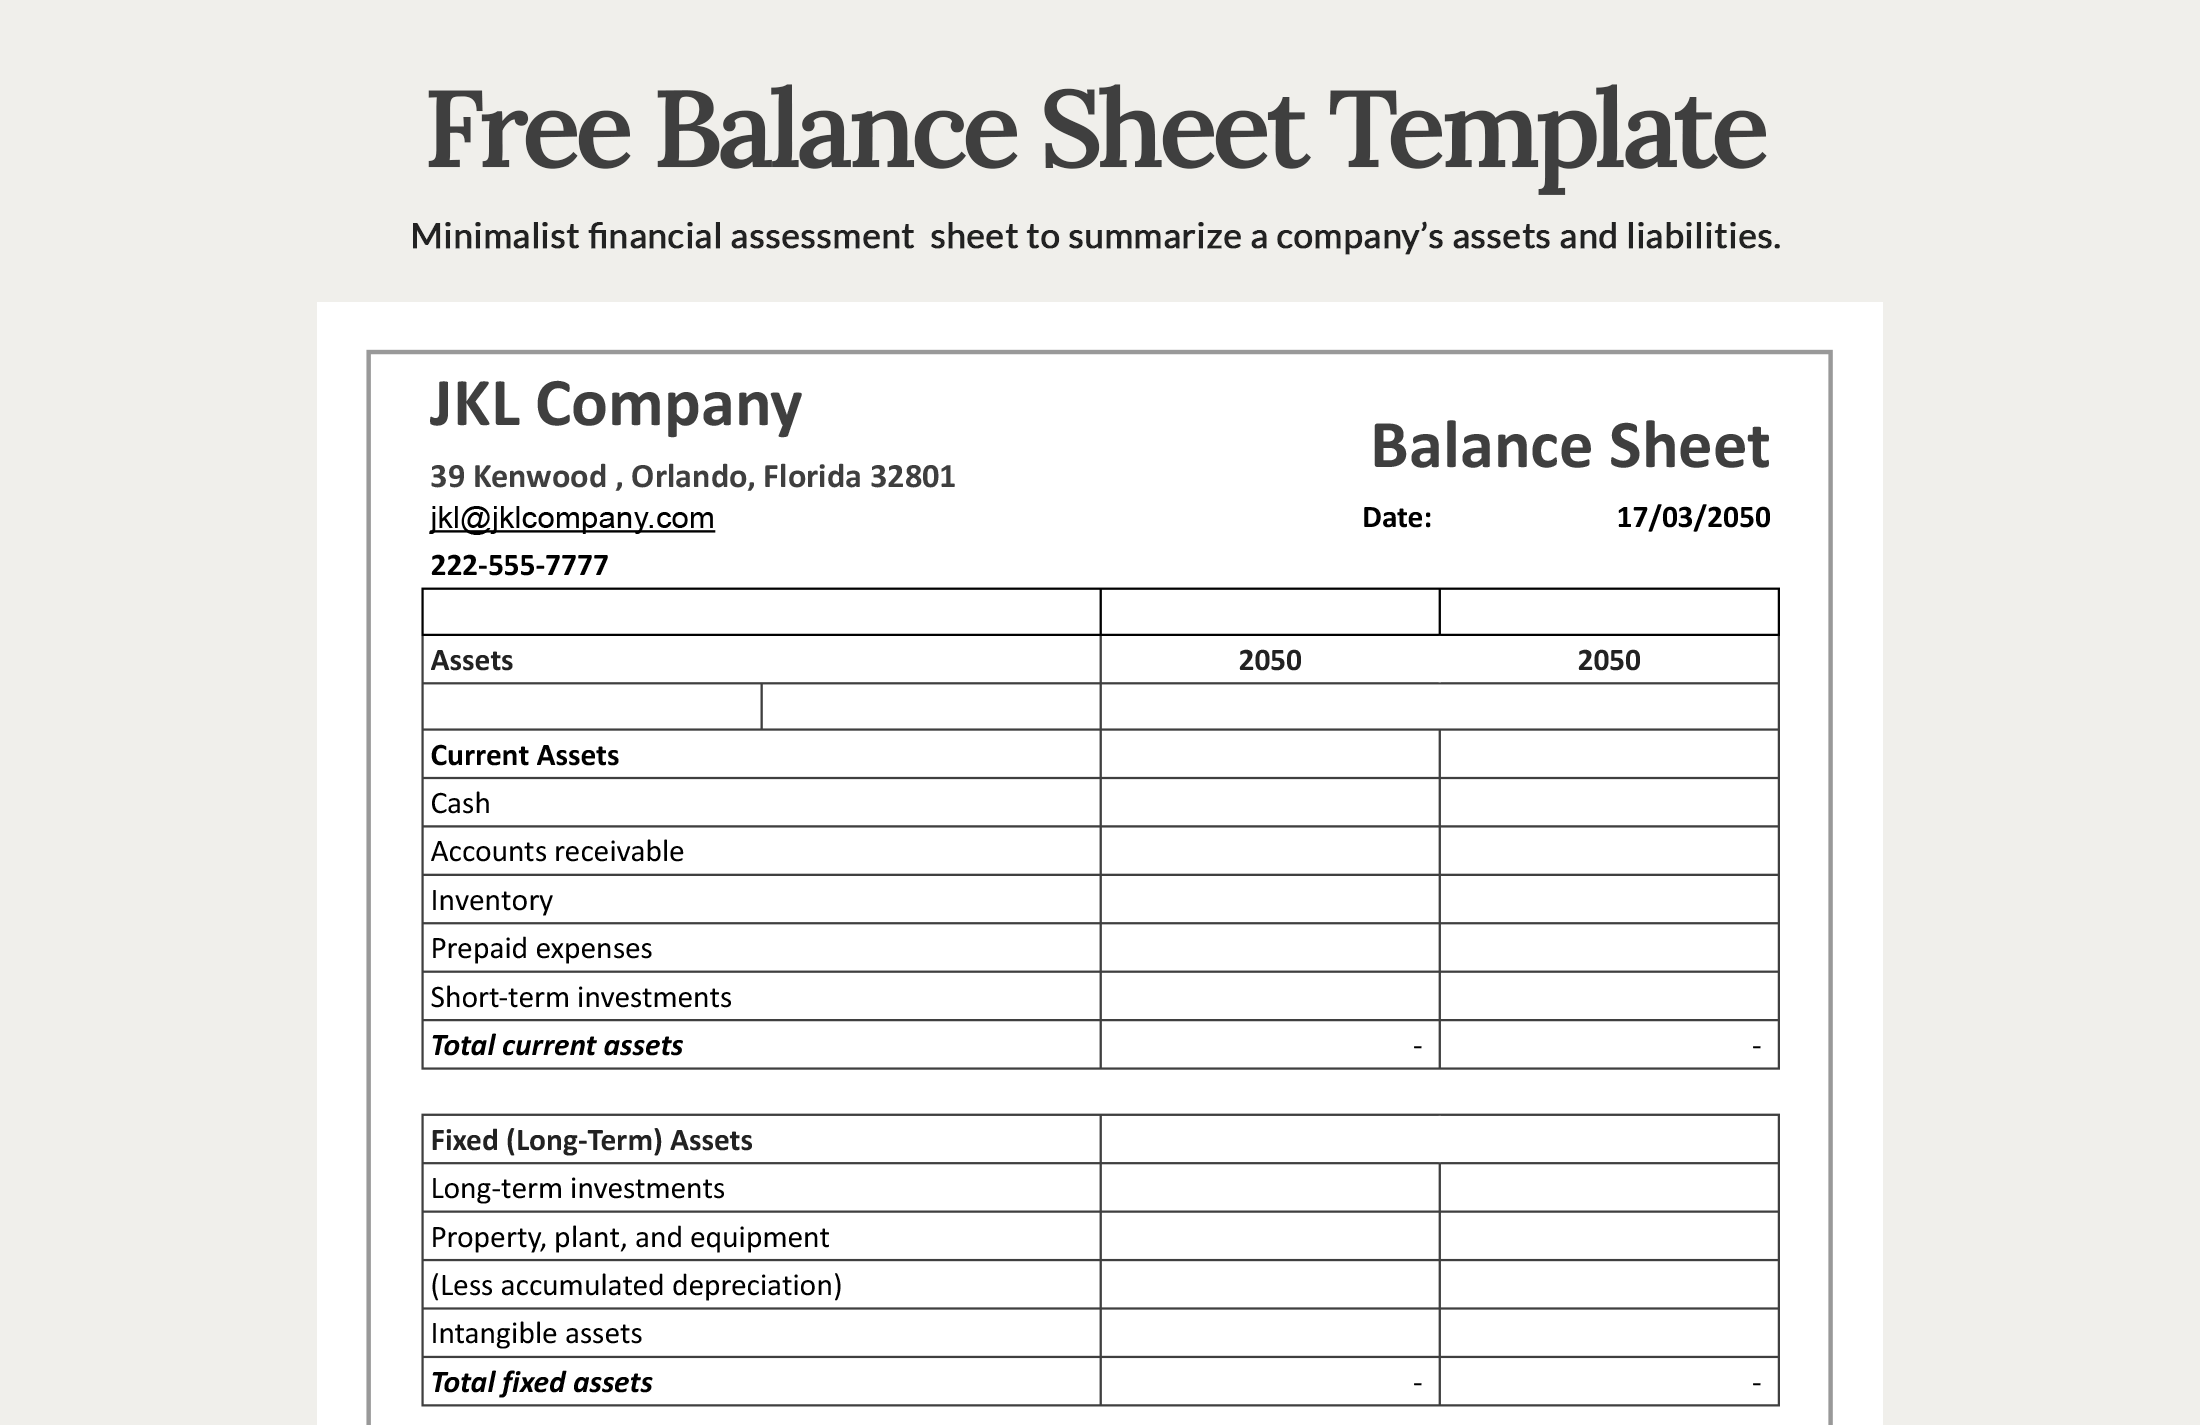 Balance Sheet Template Free Sheet Templates - vrogue.co